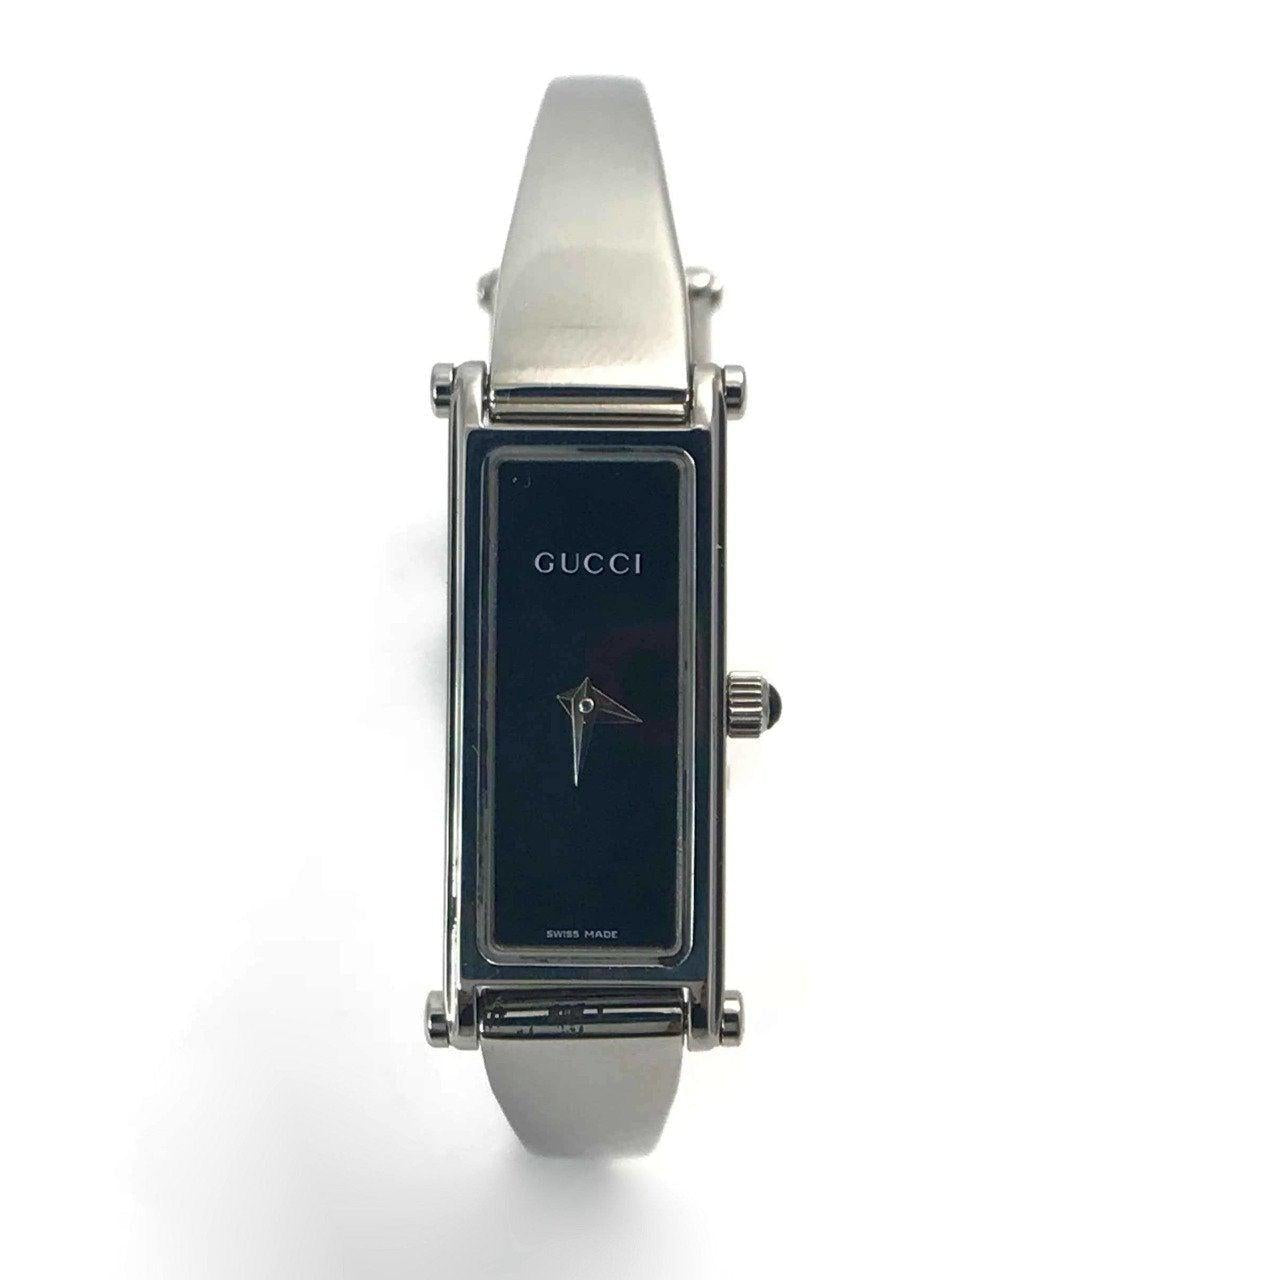 Gucci 1500 L Quartz Wrist Watch in Stainless Steel